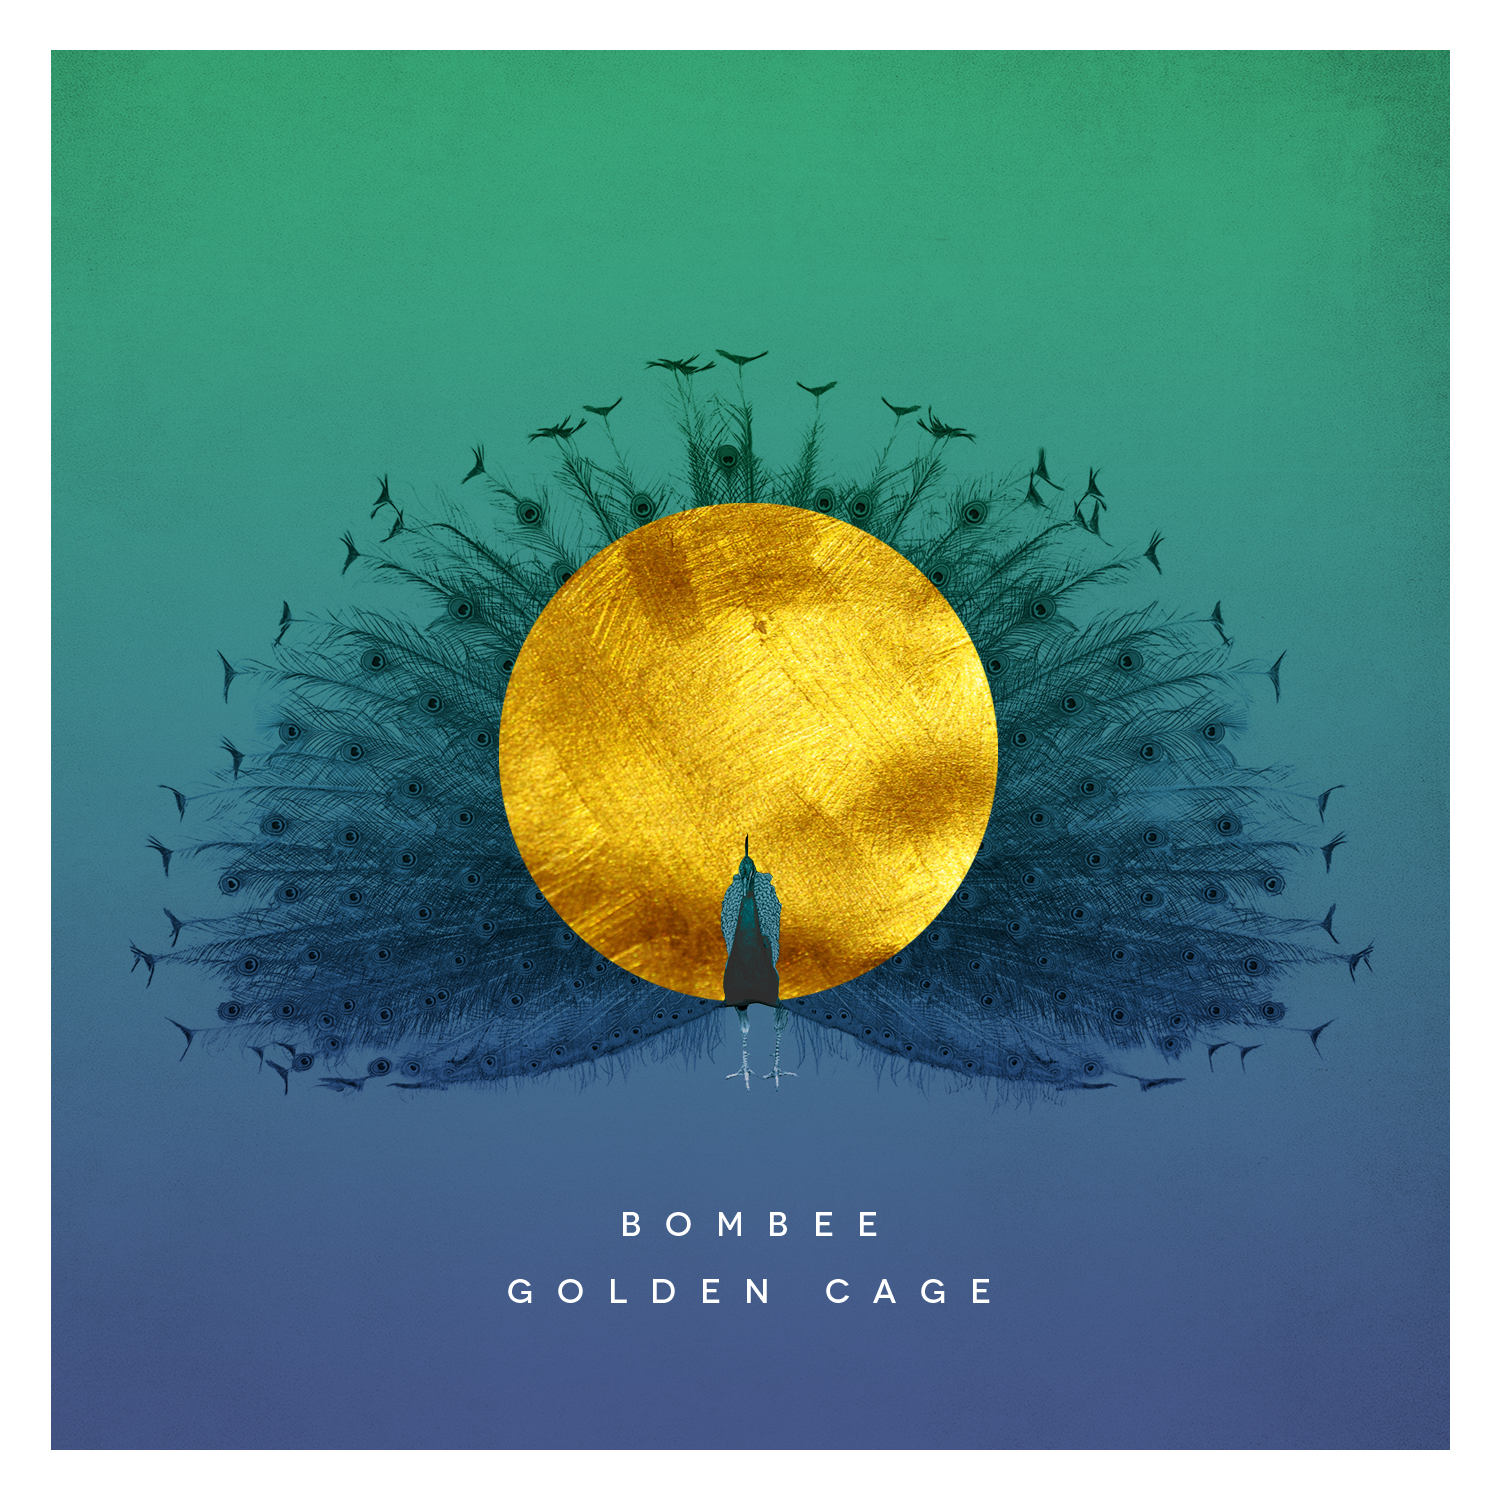 Bombee - Golden Cage - Album Cover 2016